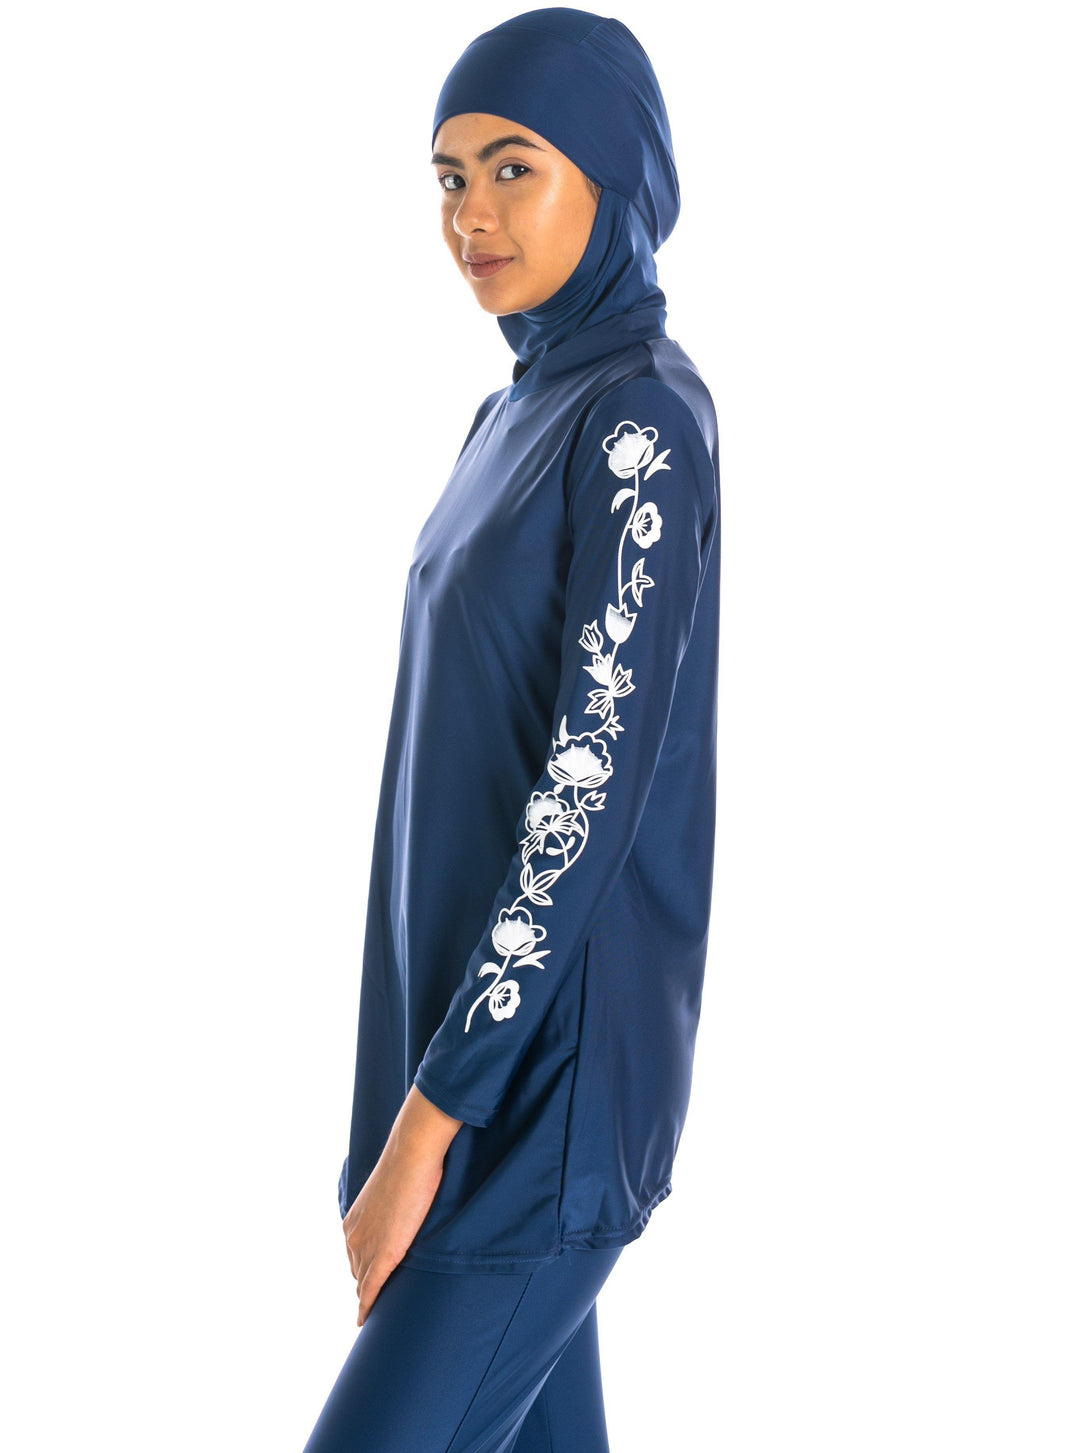 Modernly Modest Azra Floral Swimwear Set Navy Blue - Pink N' Proper